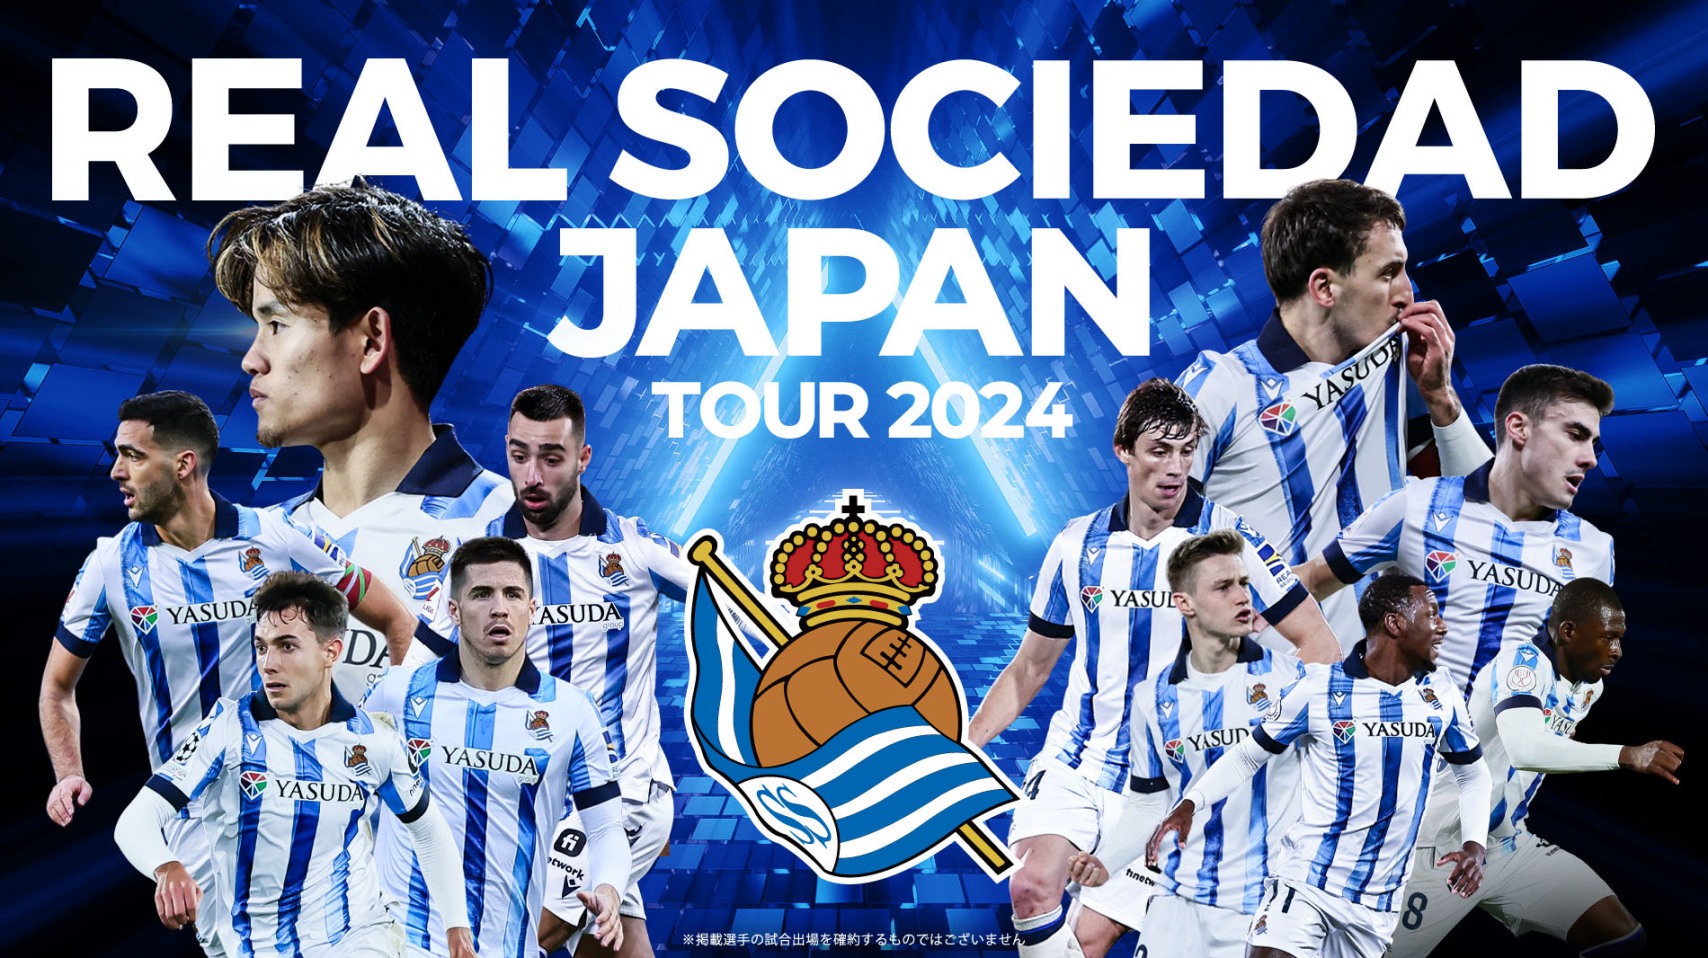 REAL SOCIEDAD JAPAN TOUR 2024